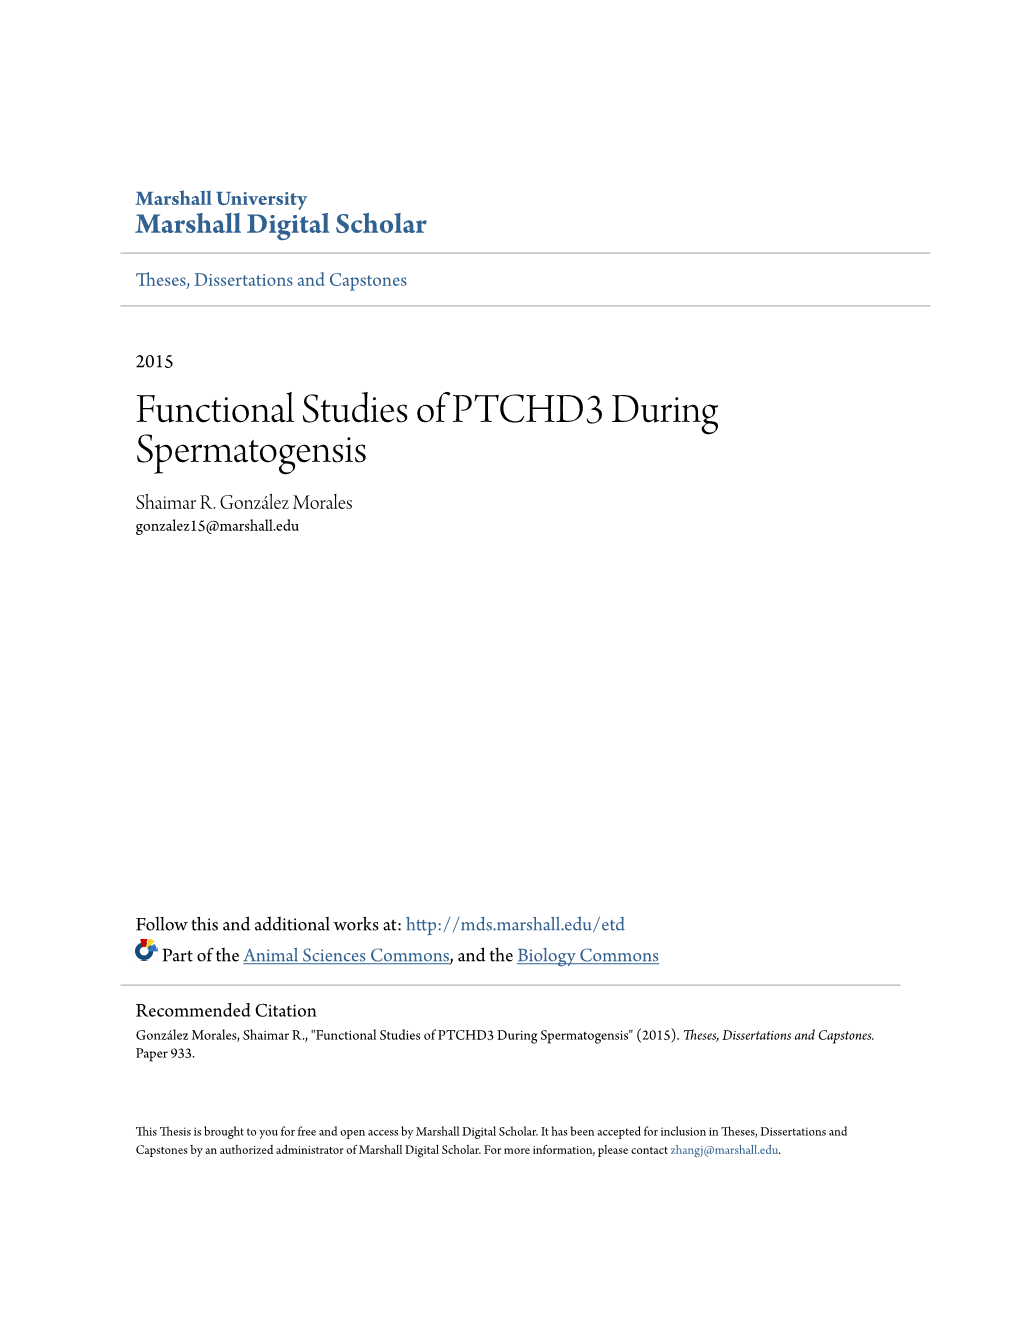 Functional Studies of PTCHD3 During Spermatogensis Shaimar R